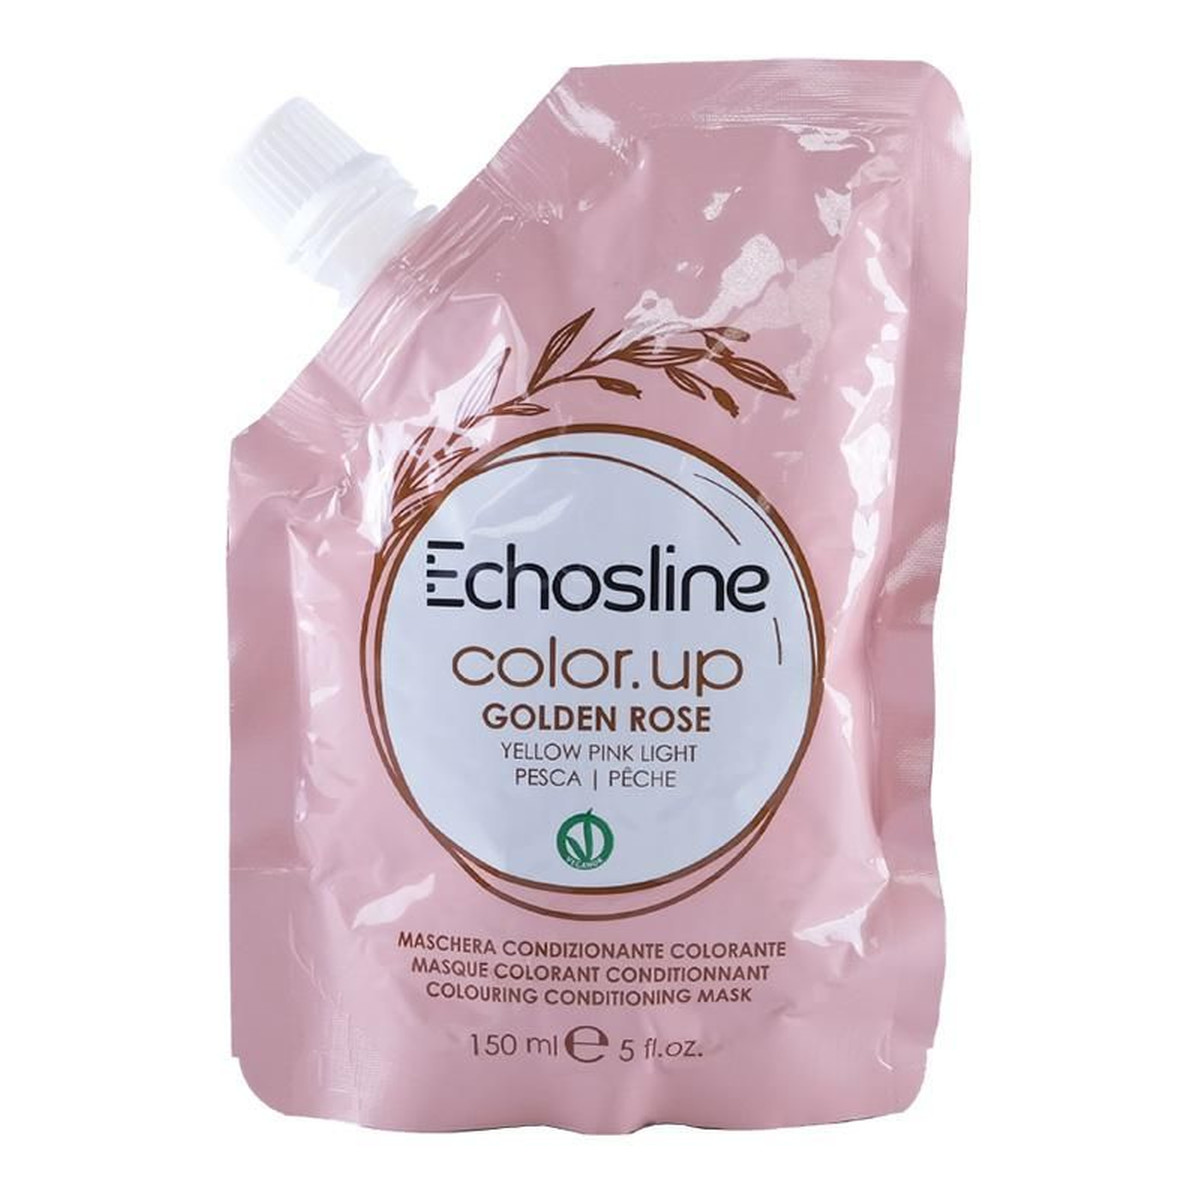 Echosline Color.up colouring conditioning mask maska koloryzująca do włosów golden rose 150ml